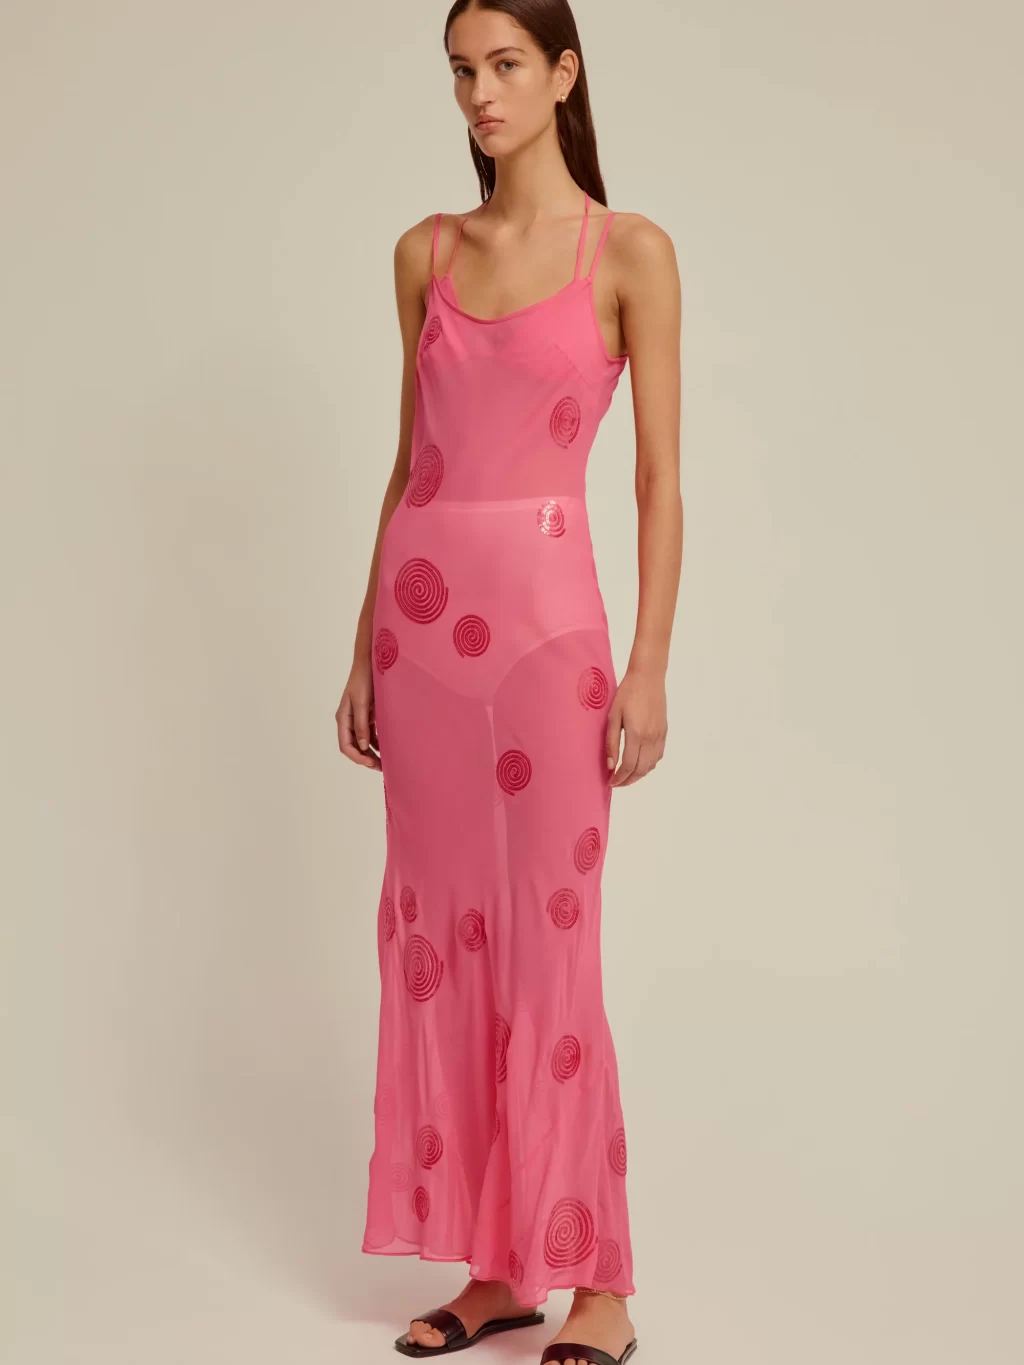 729-Venroy Womens-Sheer-Sequin-Slip-Dress-Bright-Pink 0439 2000x crop center